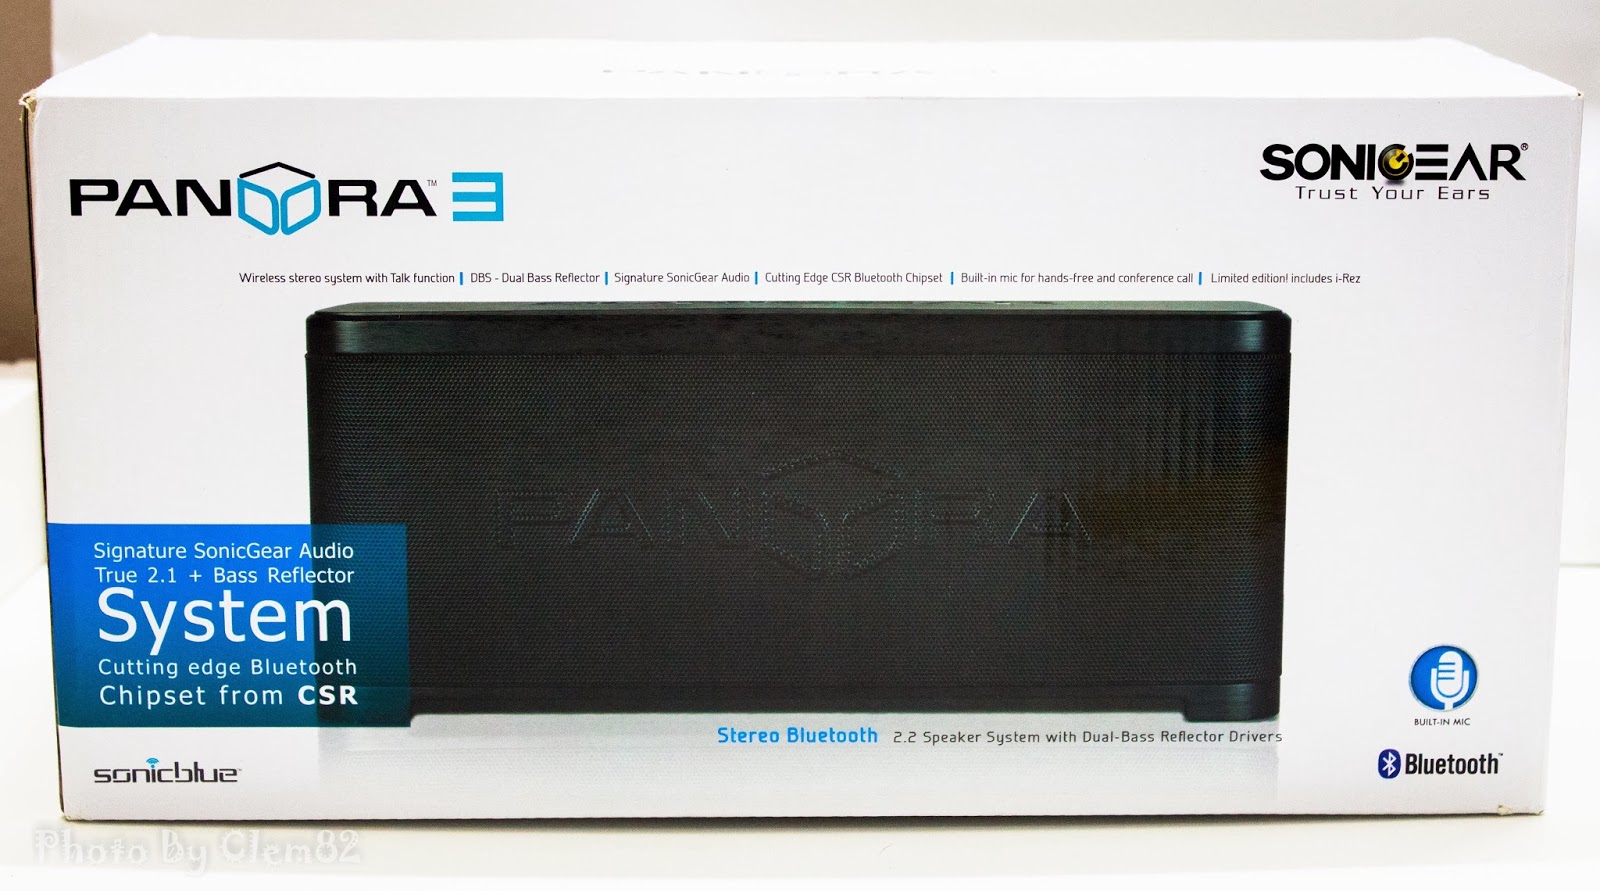 Opening Pandora's Box: SonicGear Pandora Wireless Bluetooth Media Player Series 81